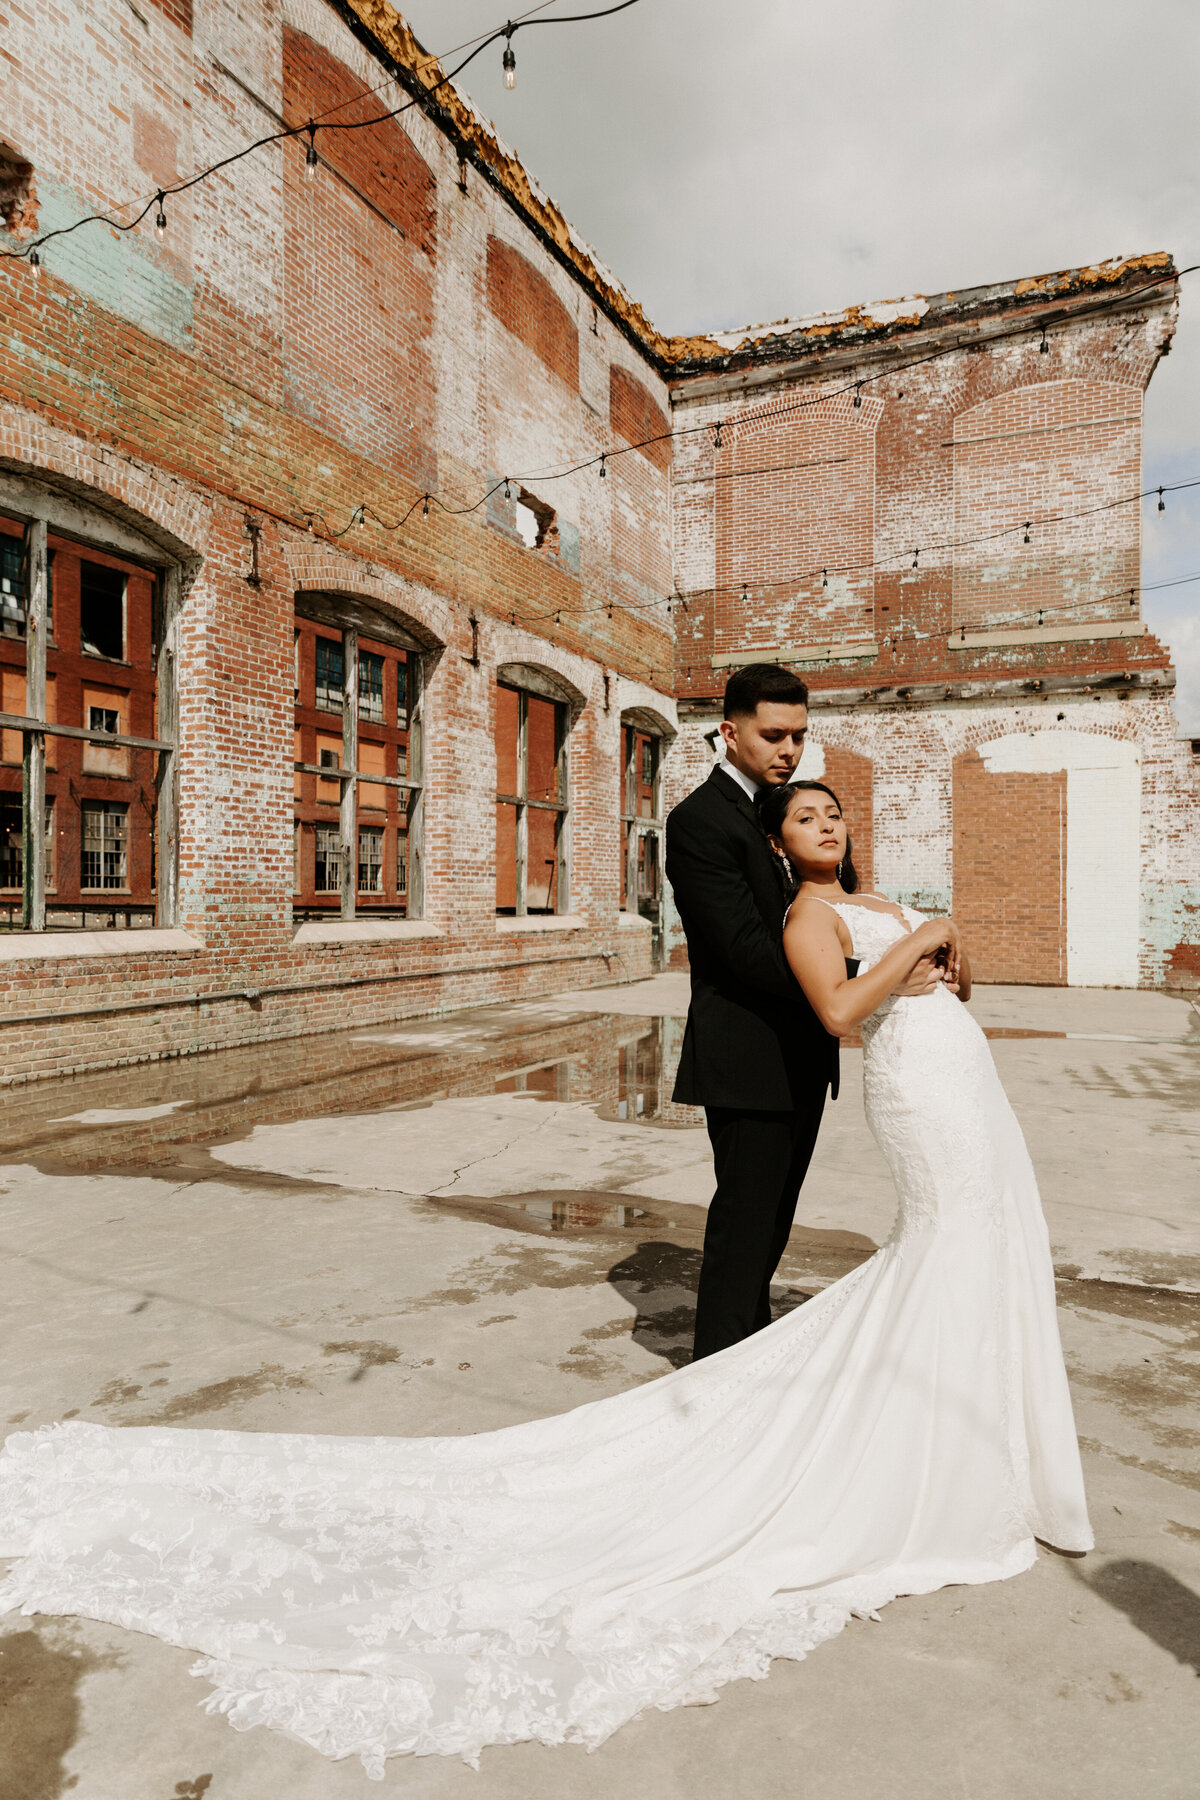 latin-couple-wedding-portrait3-industrial-venue-simplamor-photography